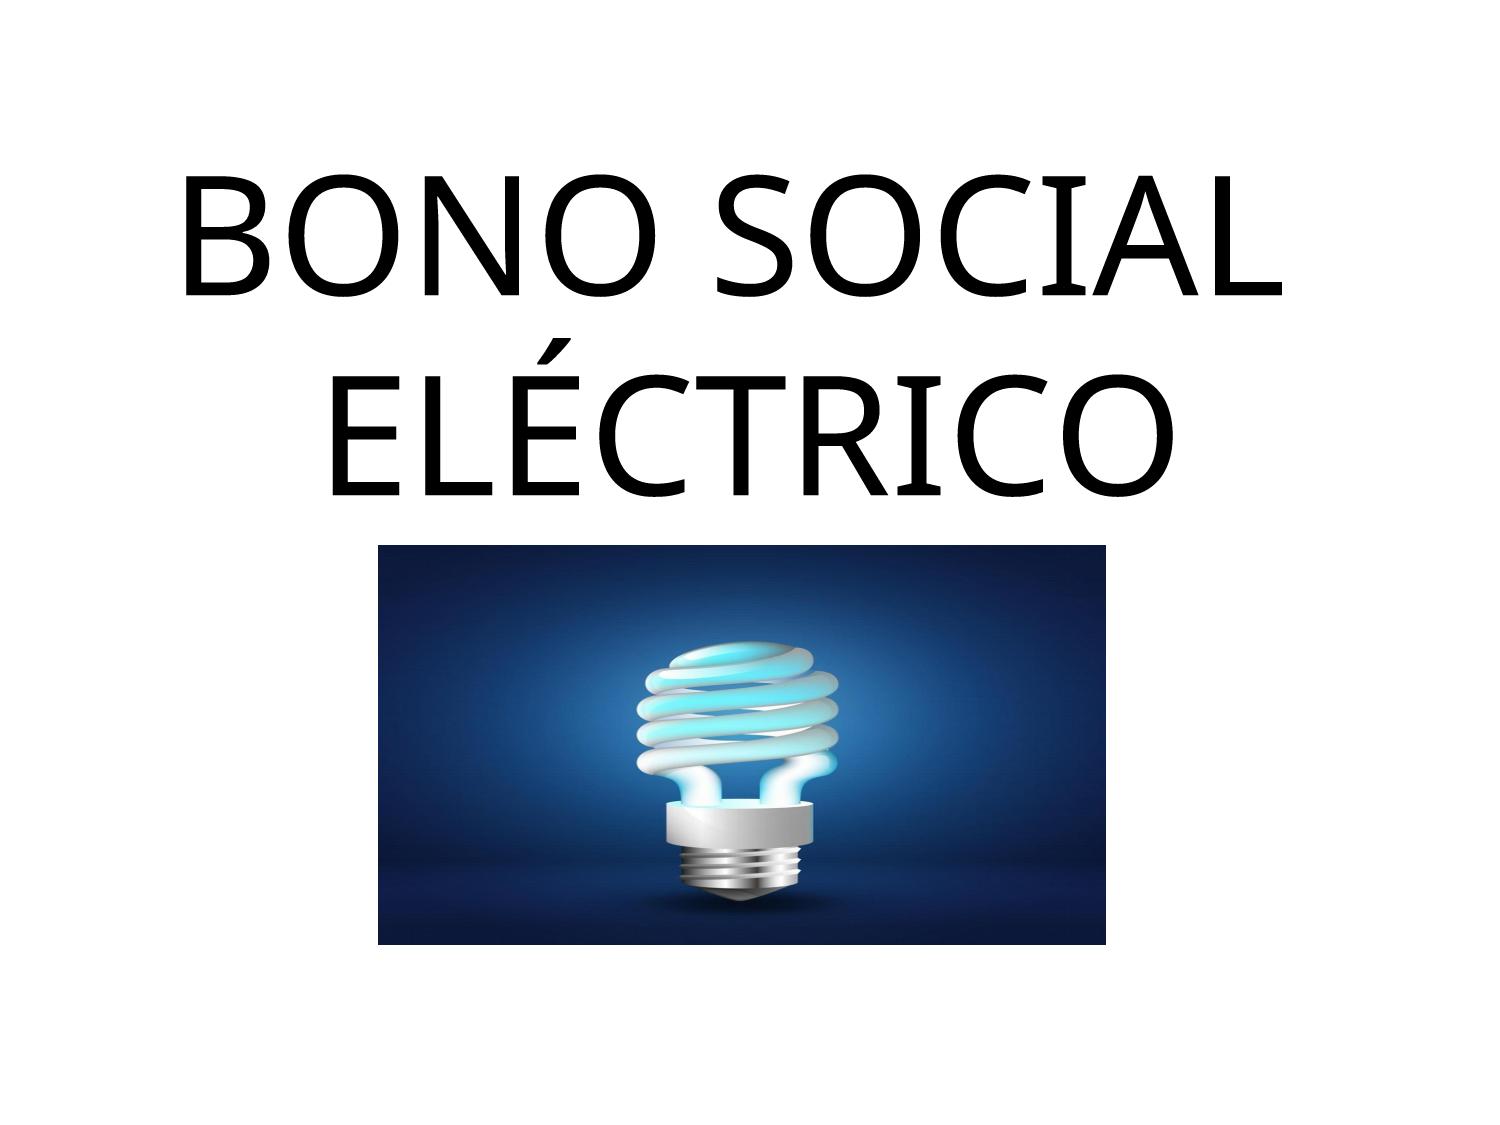 BONO SOCIAL ELECTRICO bueno castellano